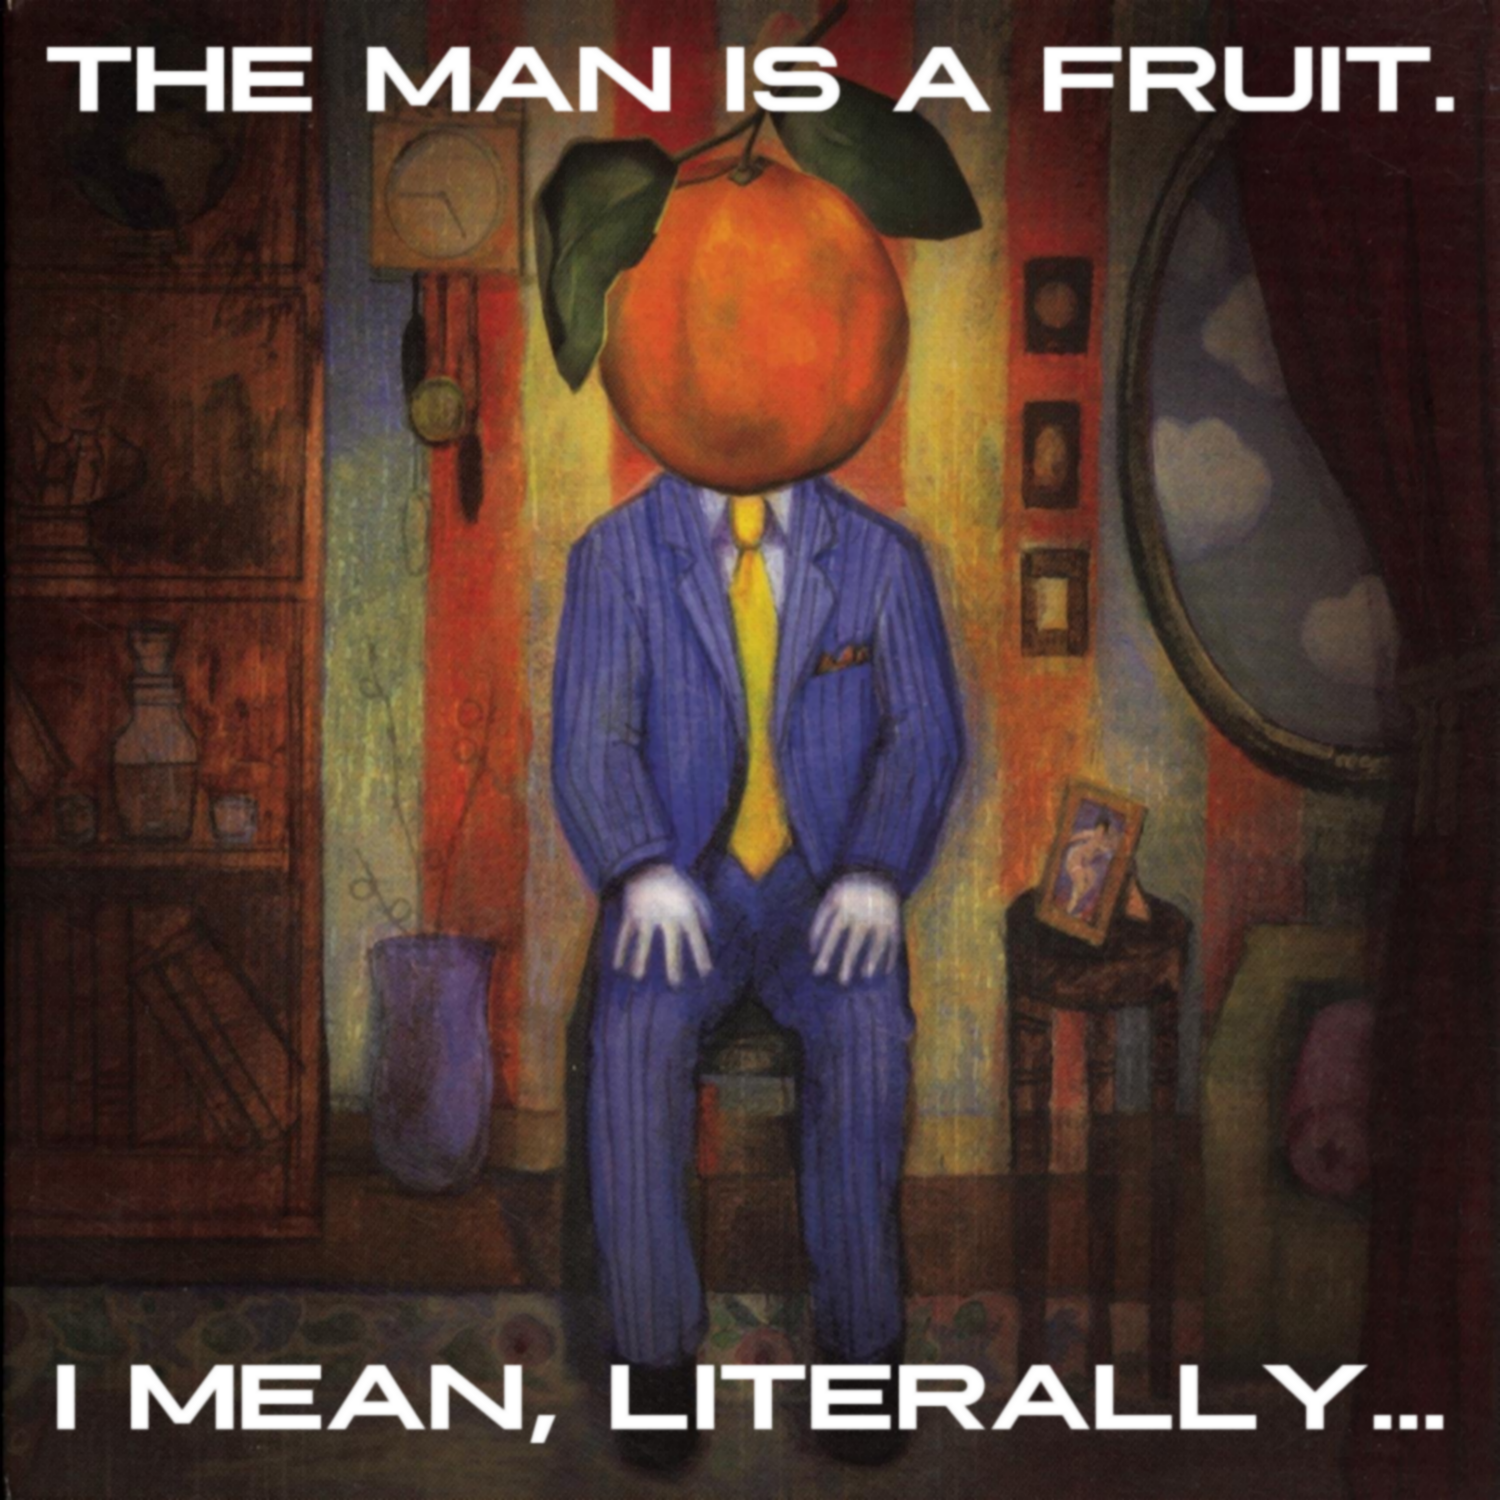 Album cover parody of Tangerine by David Mead